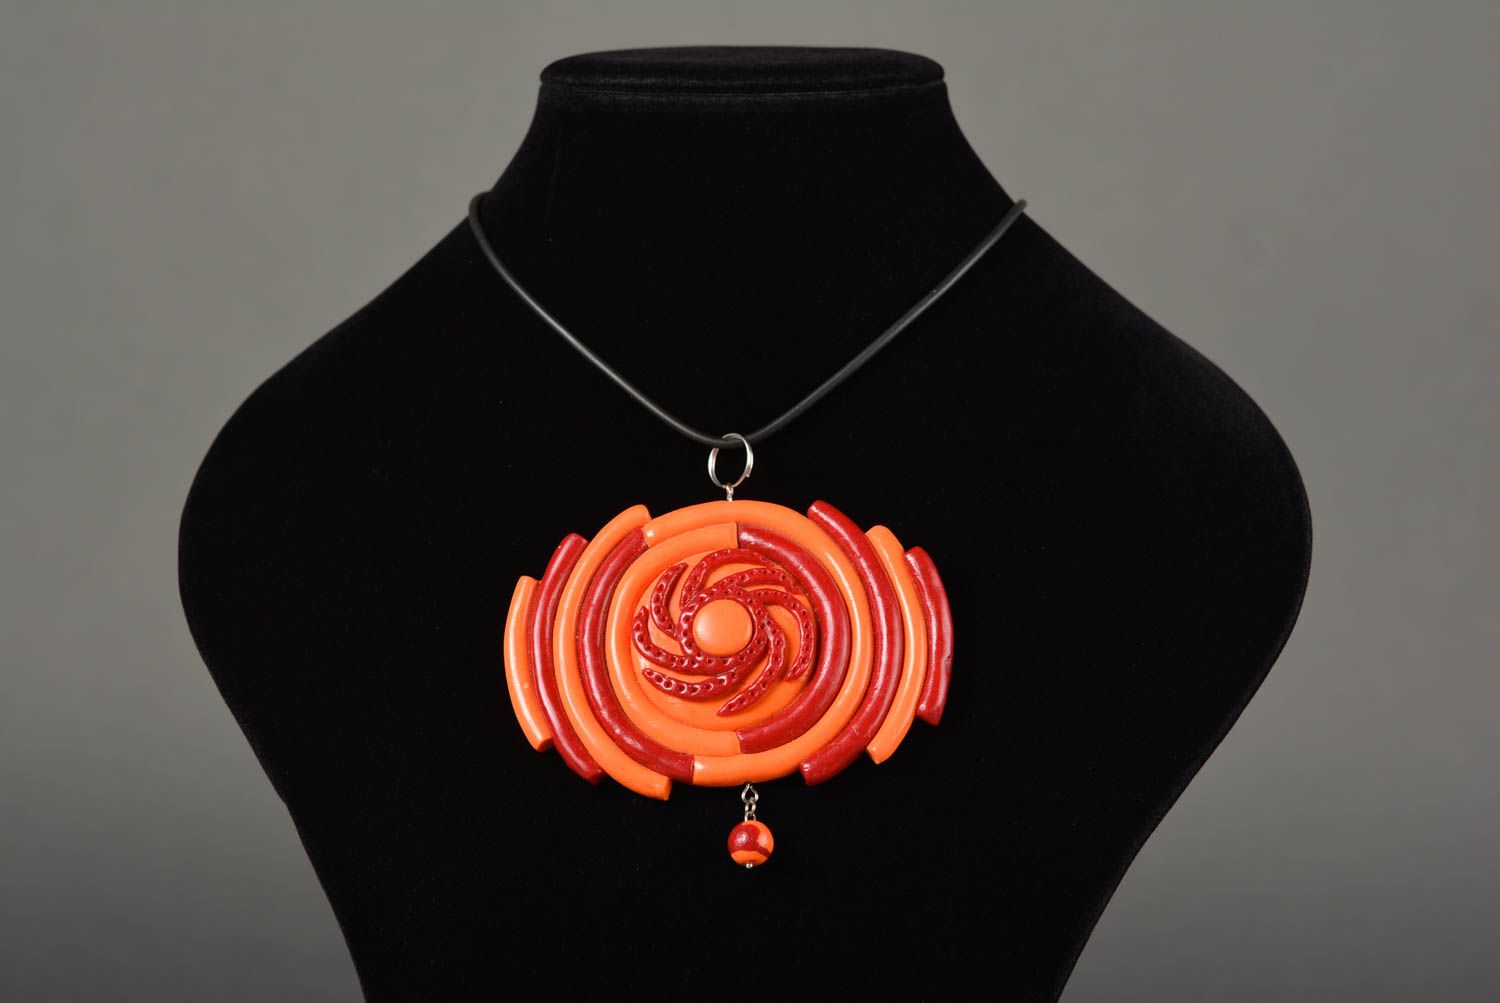 Beautiful handmade plastic pendant neck pendant design cool jewelry gift ideas photo 2